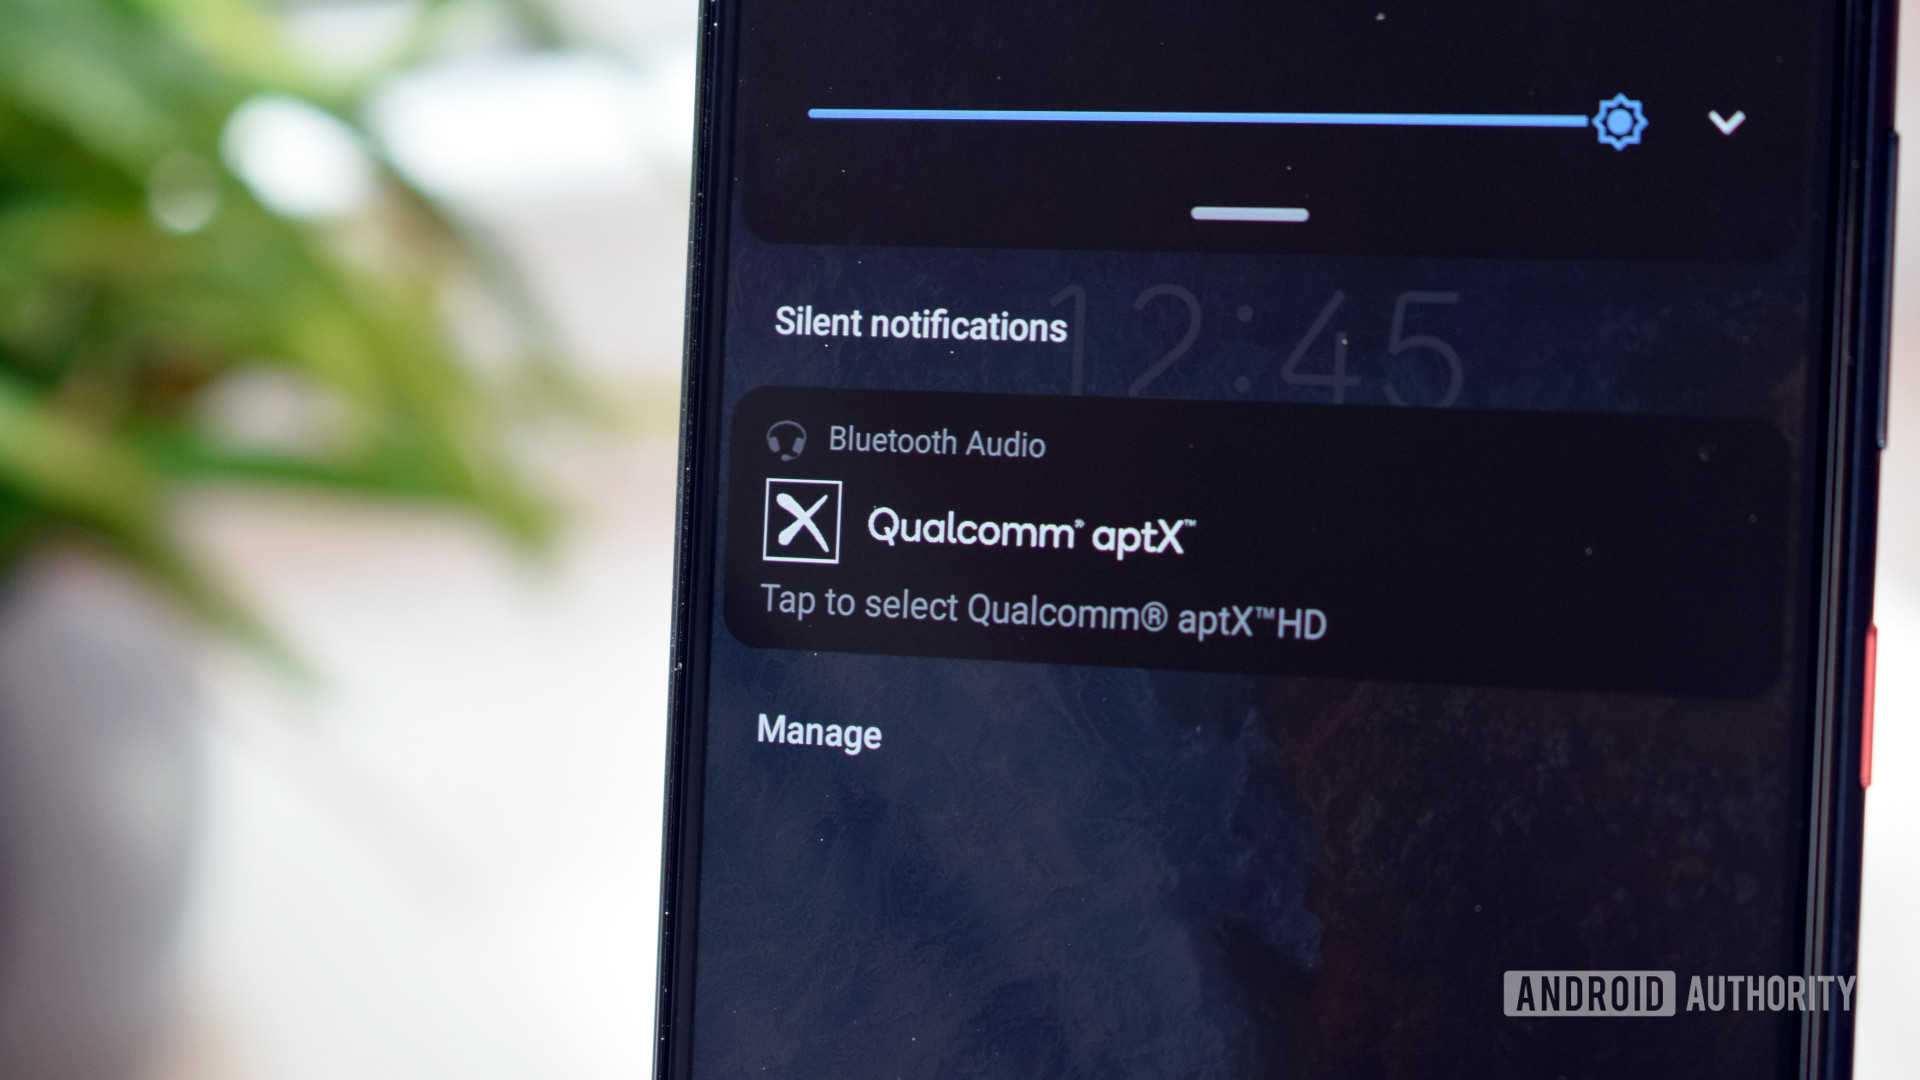 Qualcomm aptX audio notification on phone